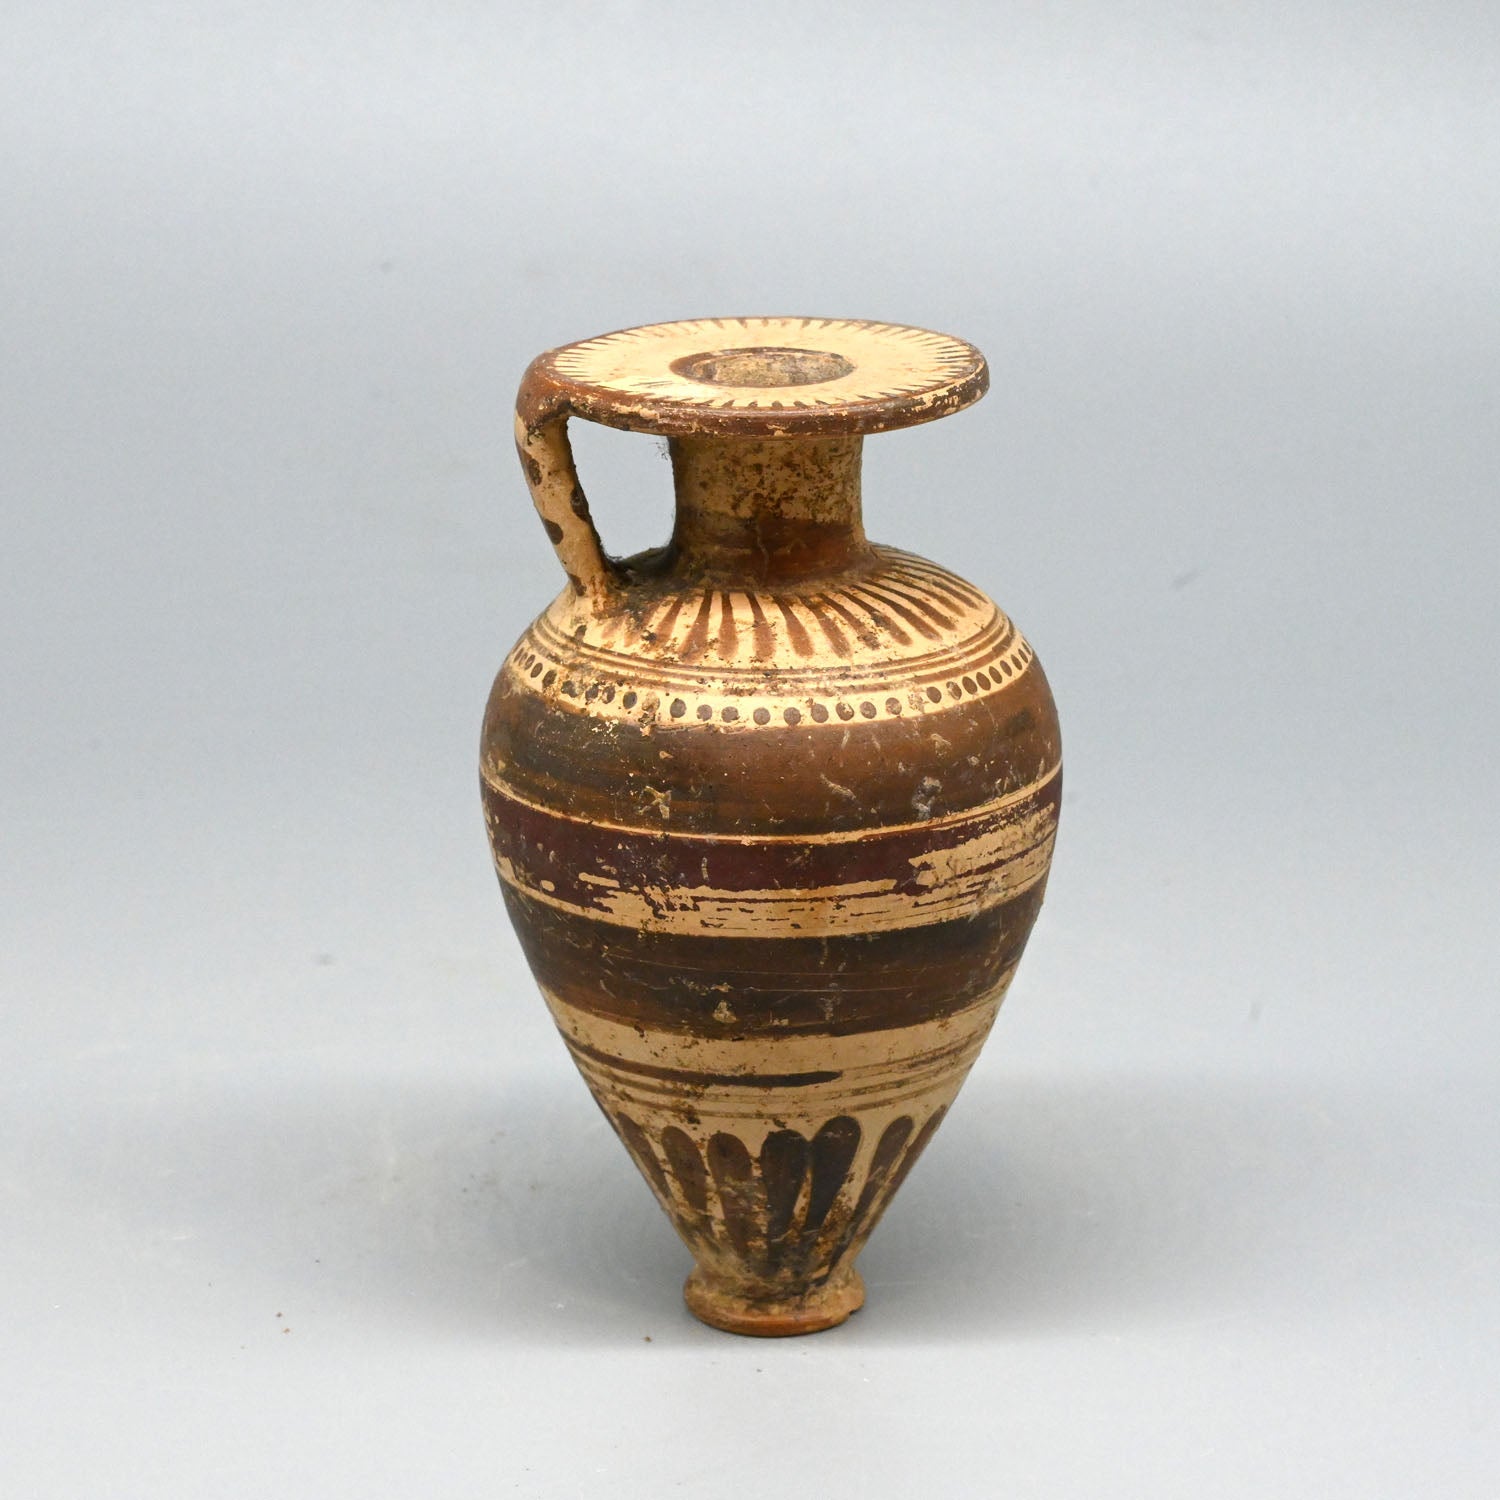 An Etrusco-Corinthian Piriform Aryballos, ca. 6th century BCE